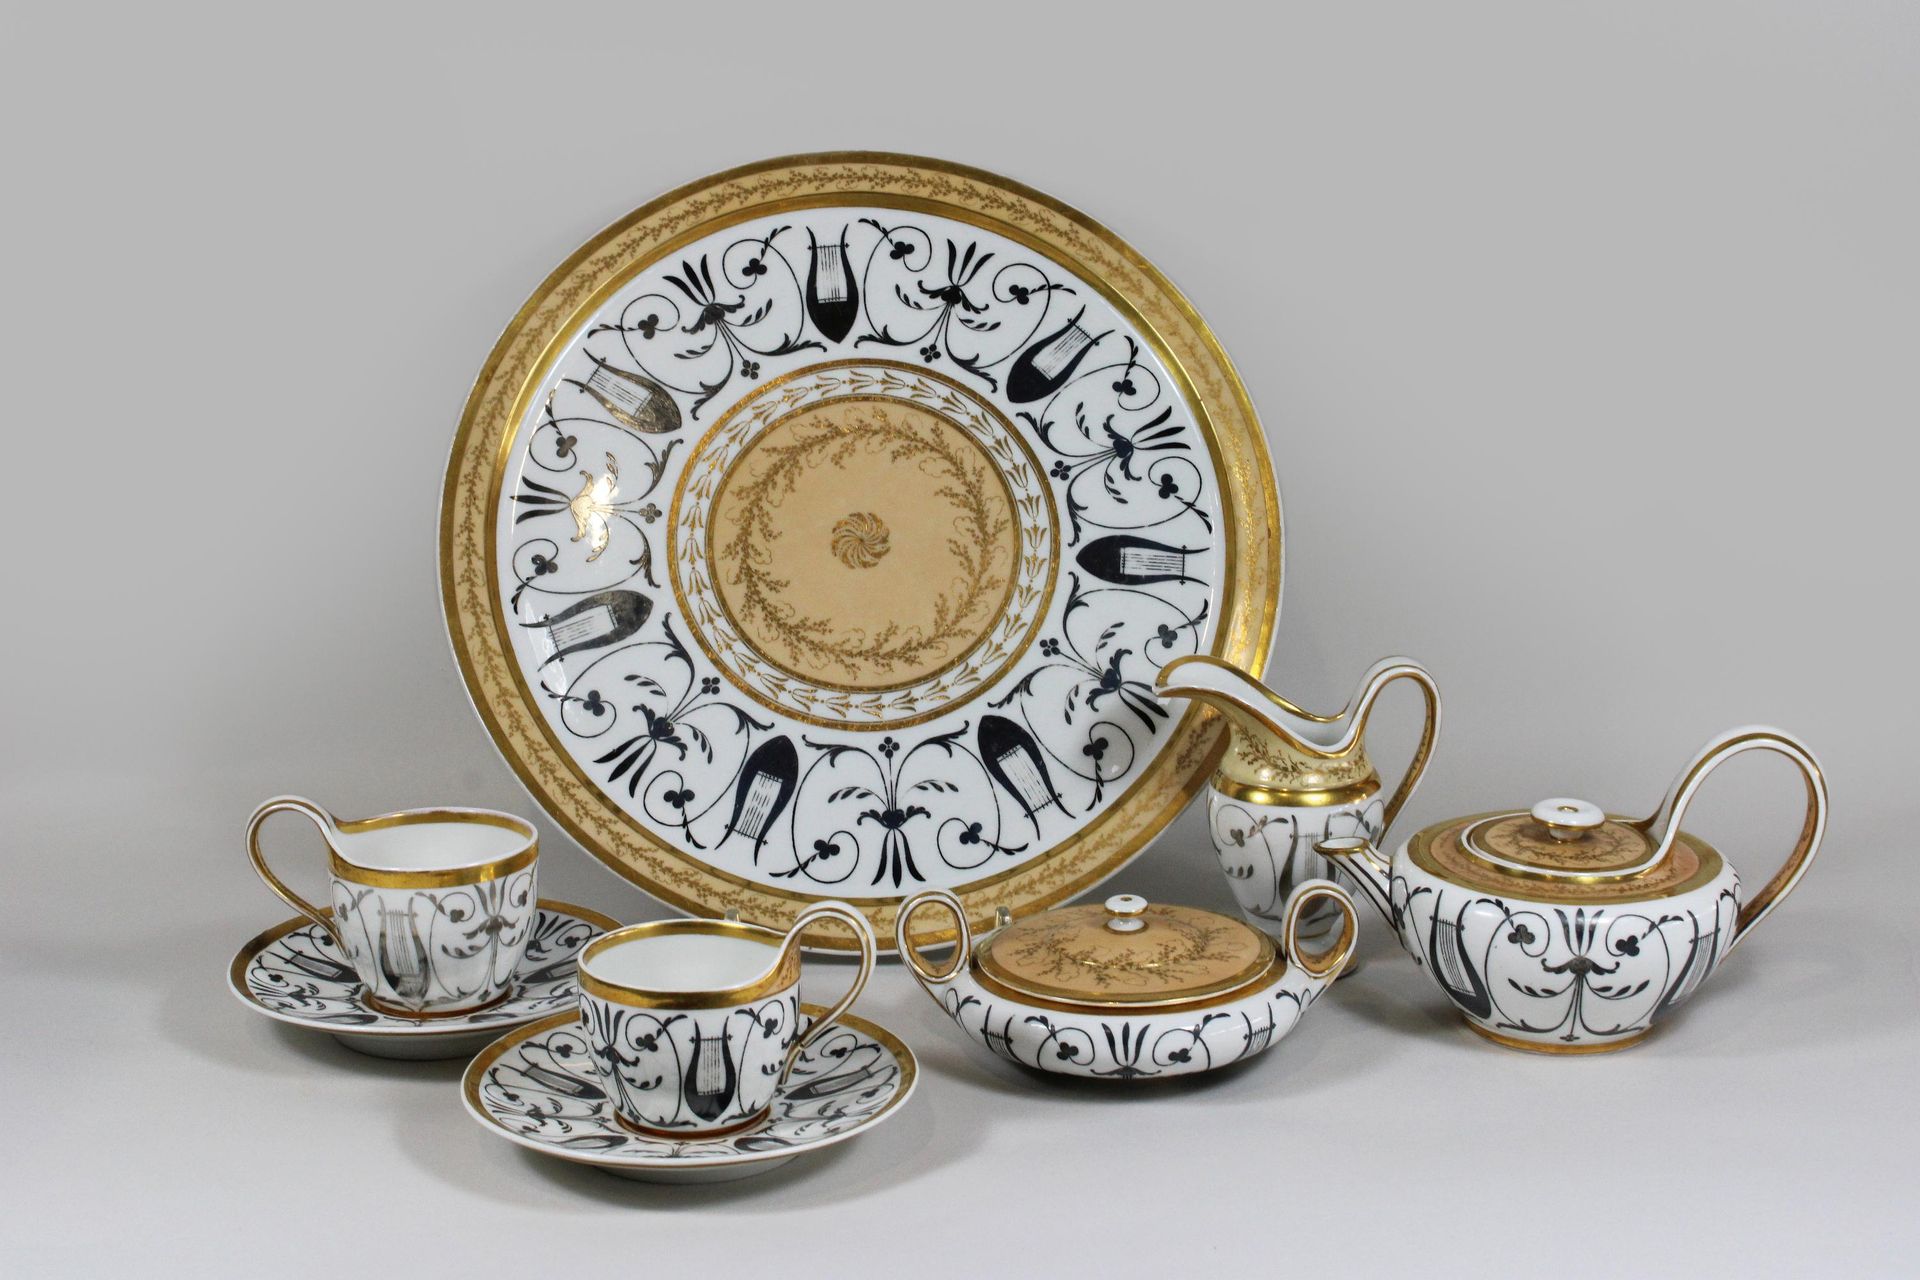 Teeservice, 8 Tl. 
茶具, 8件, KPM, 瓷器, 第二选择, 底部有标记, 金黑色装饰, 包括: 1个餐盘, 1个摩卡壶, 1个糖碗, 1&hellip;